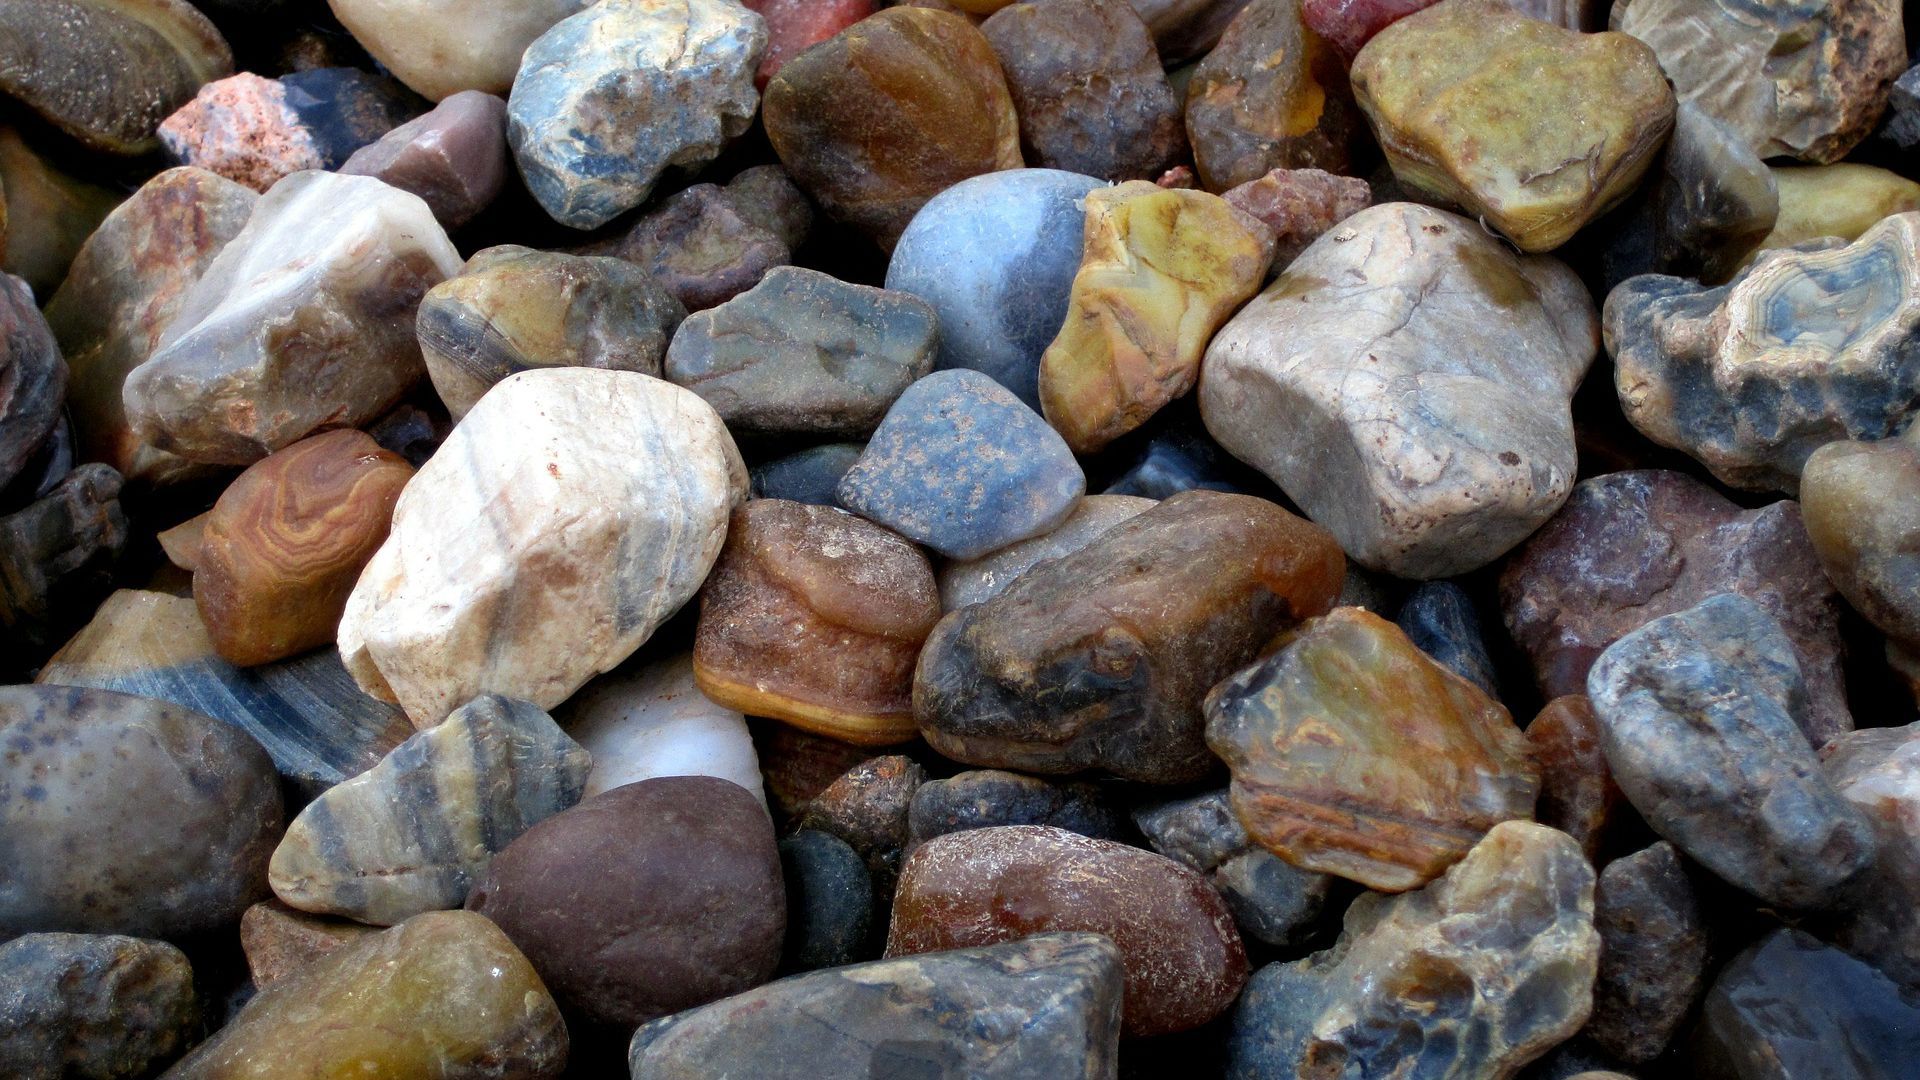 Gallery of Chert Rocks and Gemstones